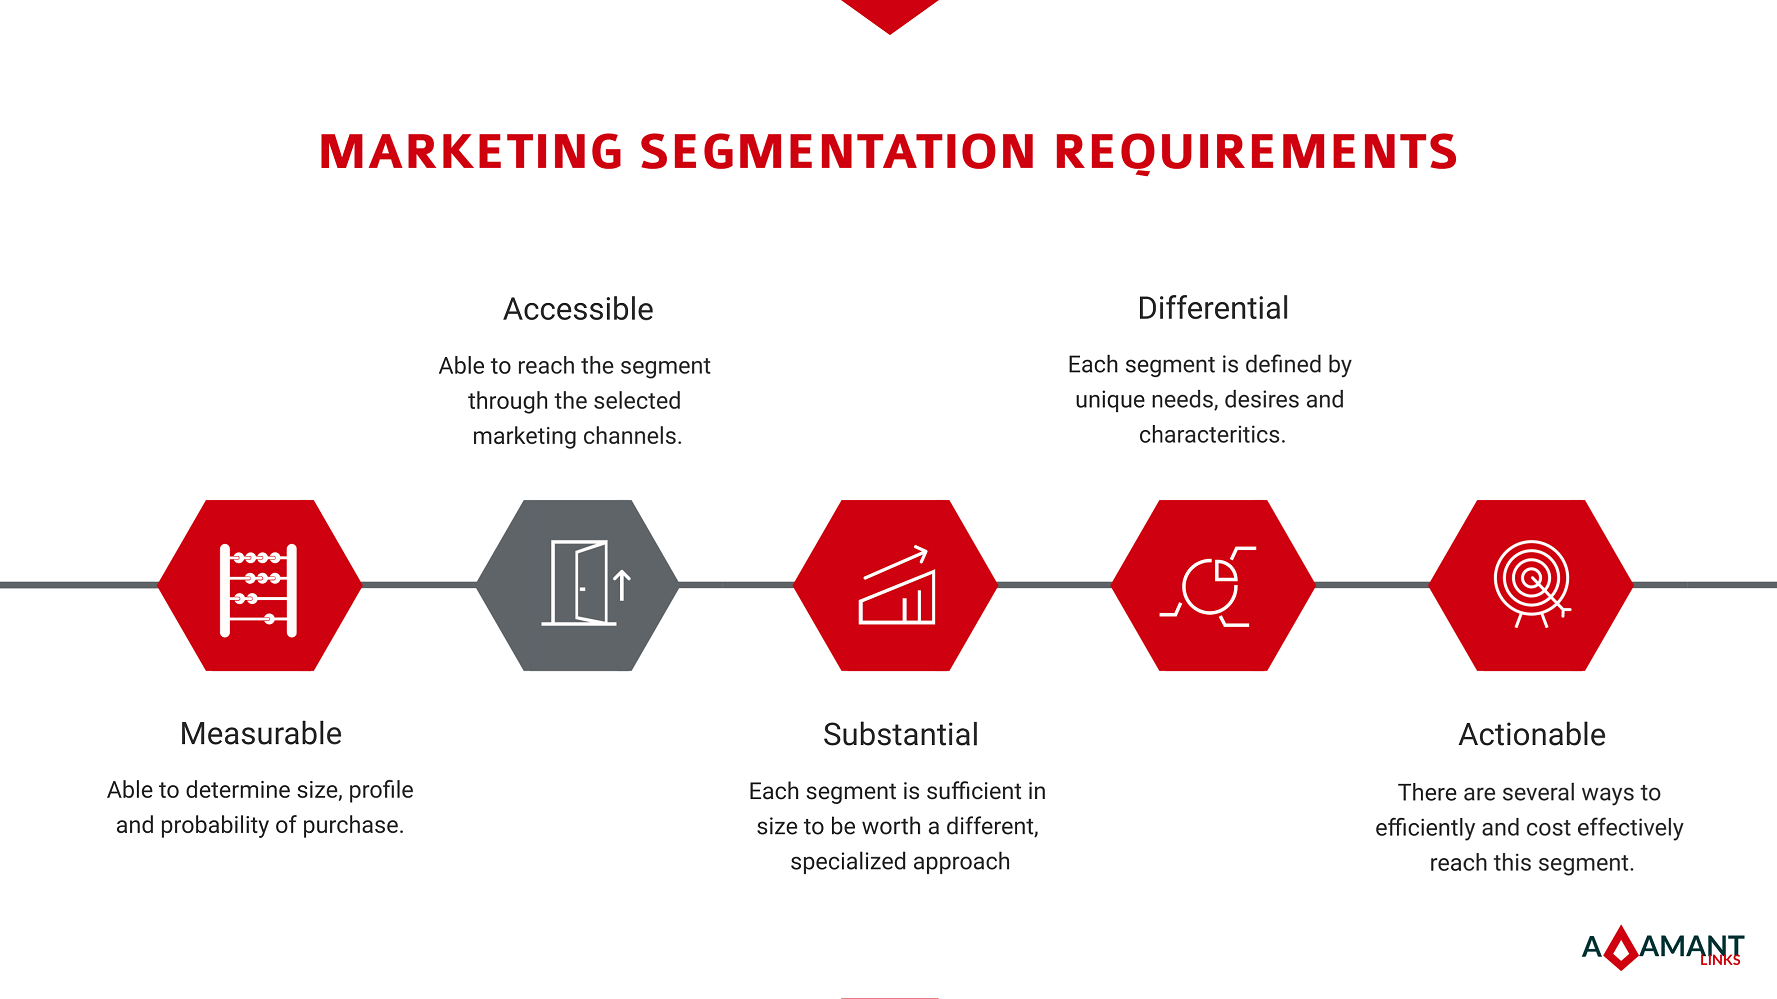 Adamant Links - Market Segmentation Requirements